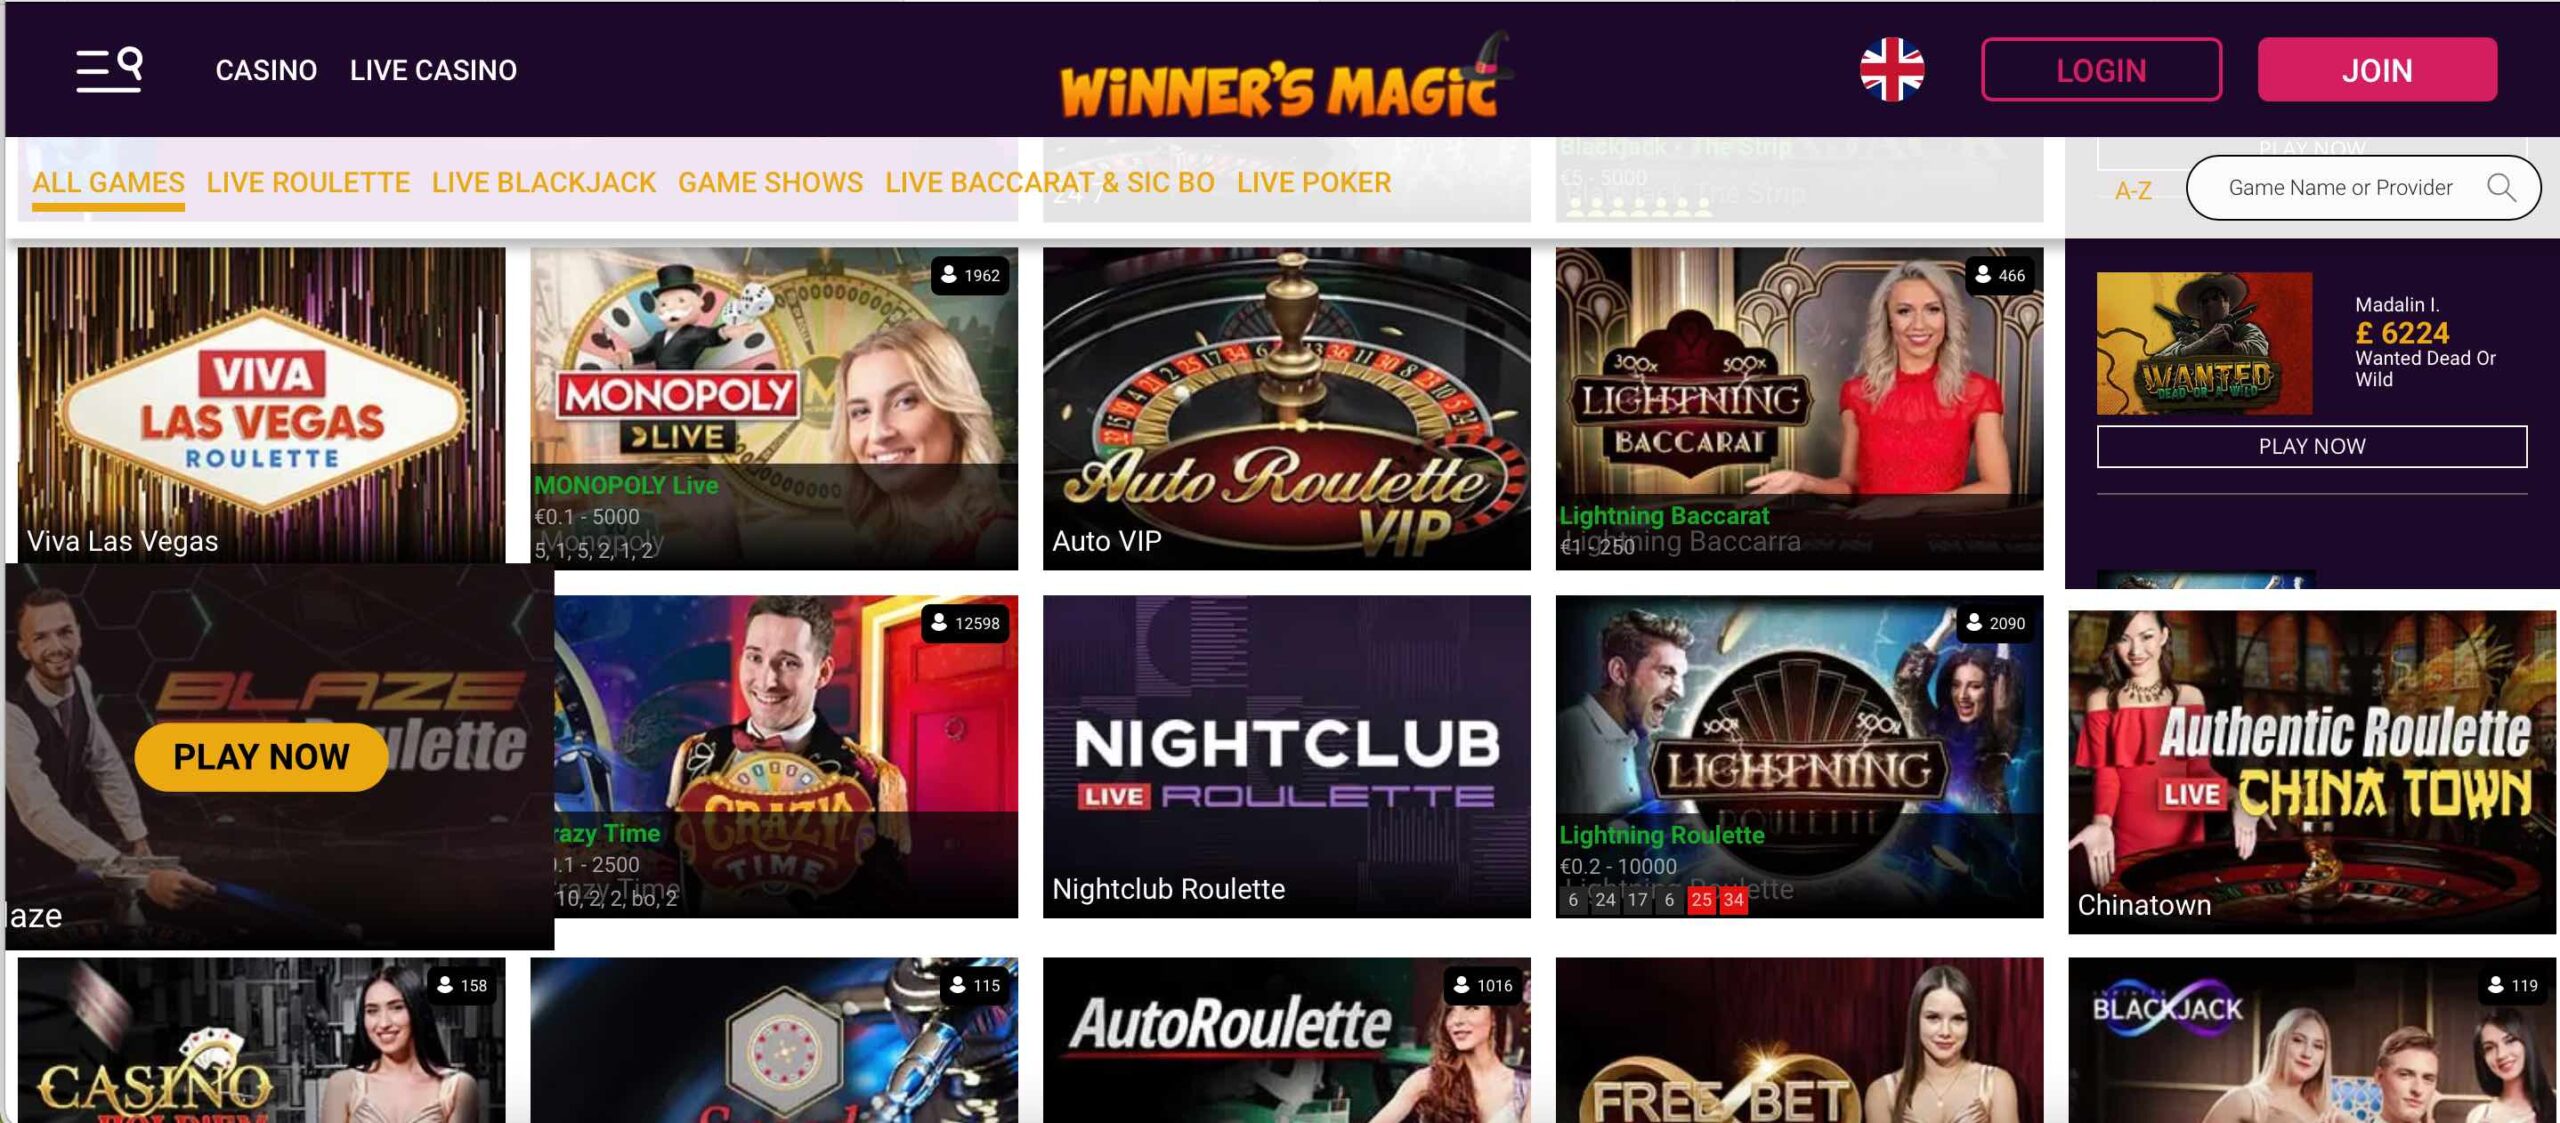 Winners Magic Casino Live Games